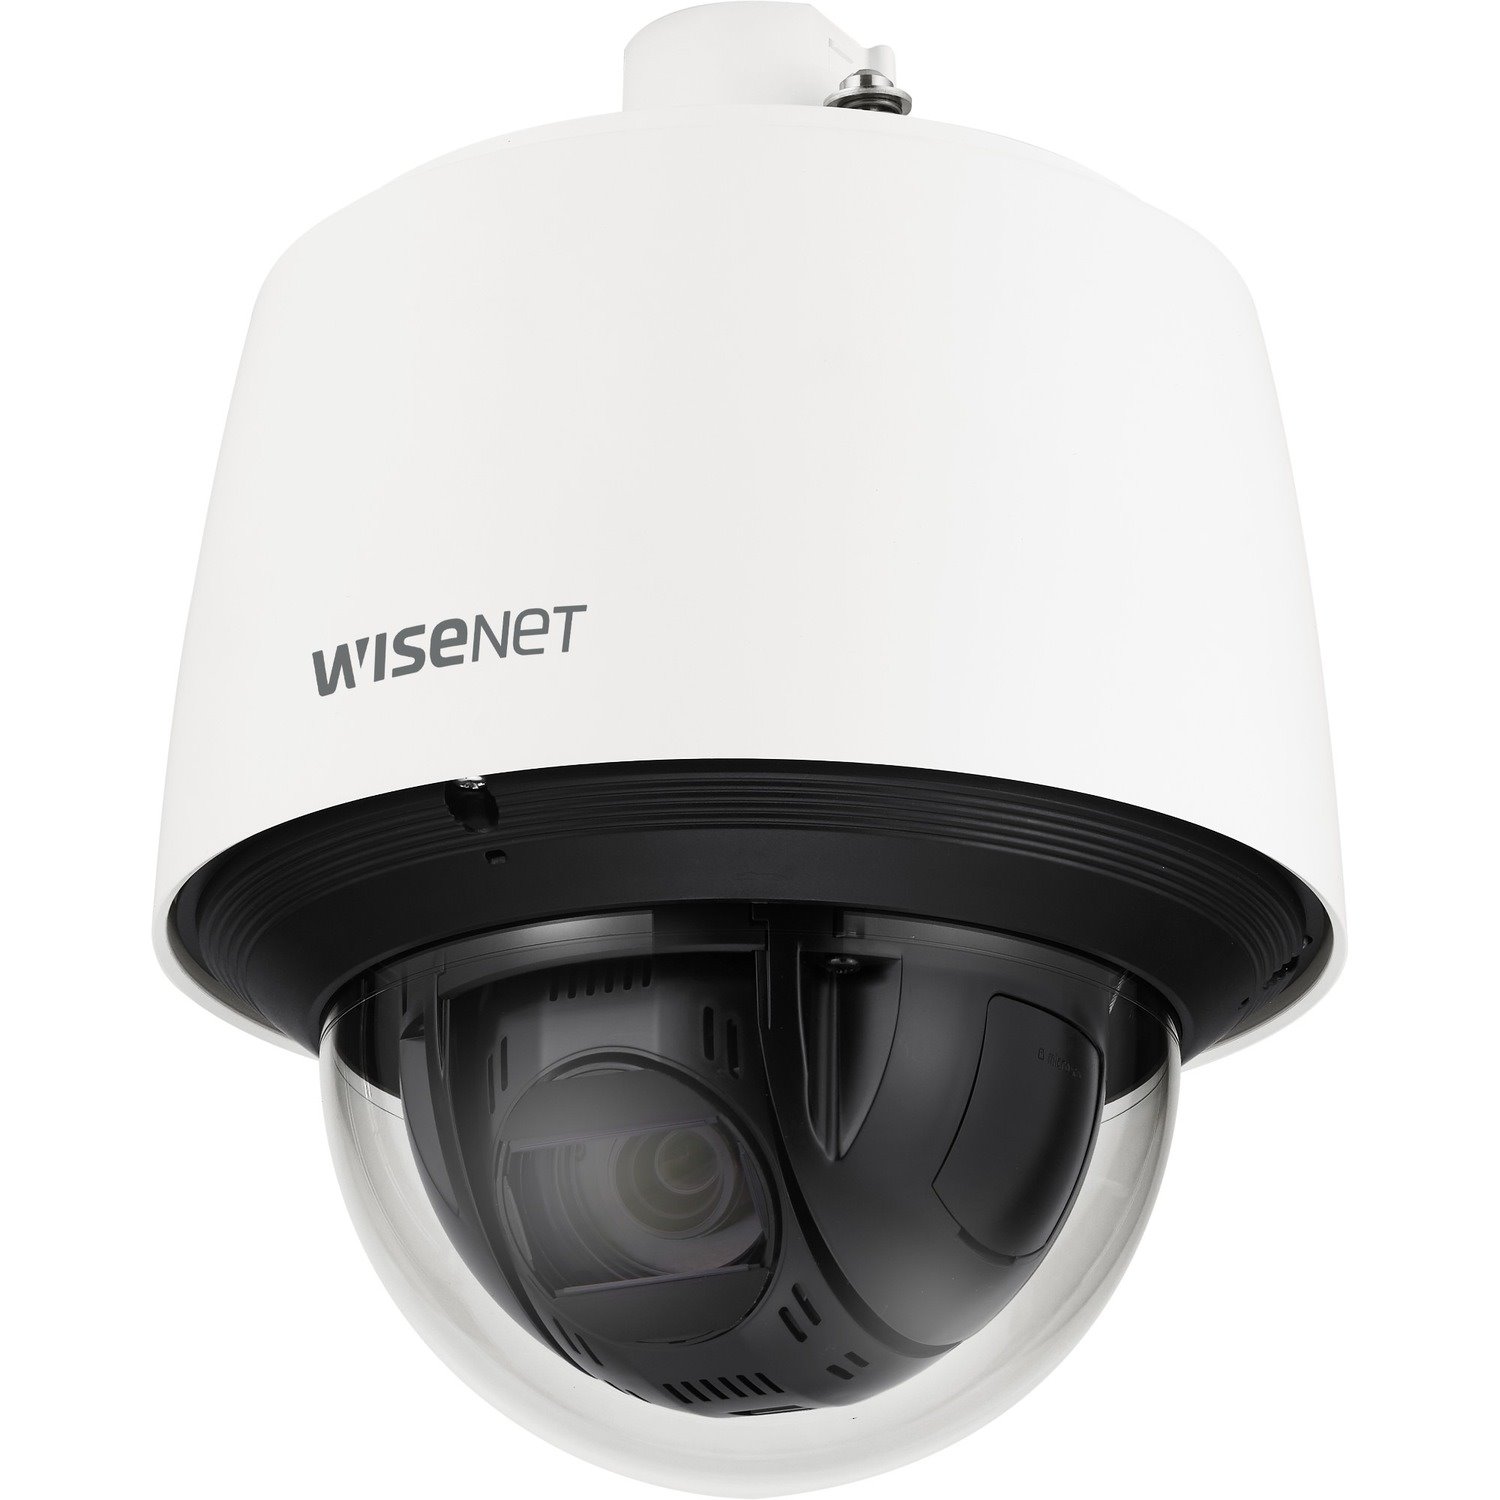 Wisenet QNP-6320H 2 Megapixel Full HD Network Camera - Color - White